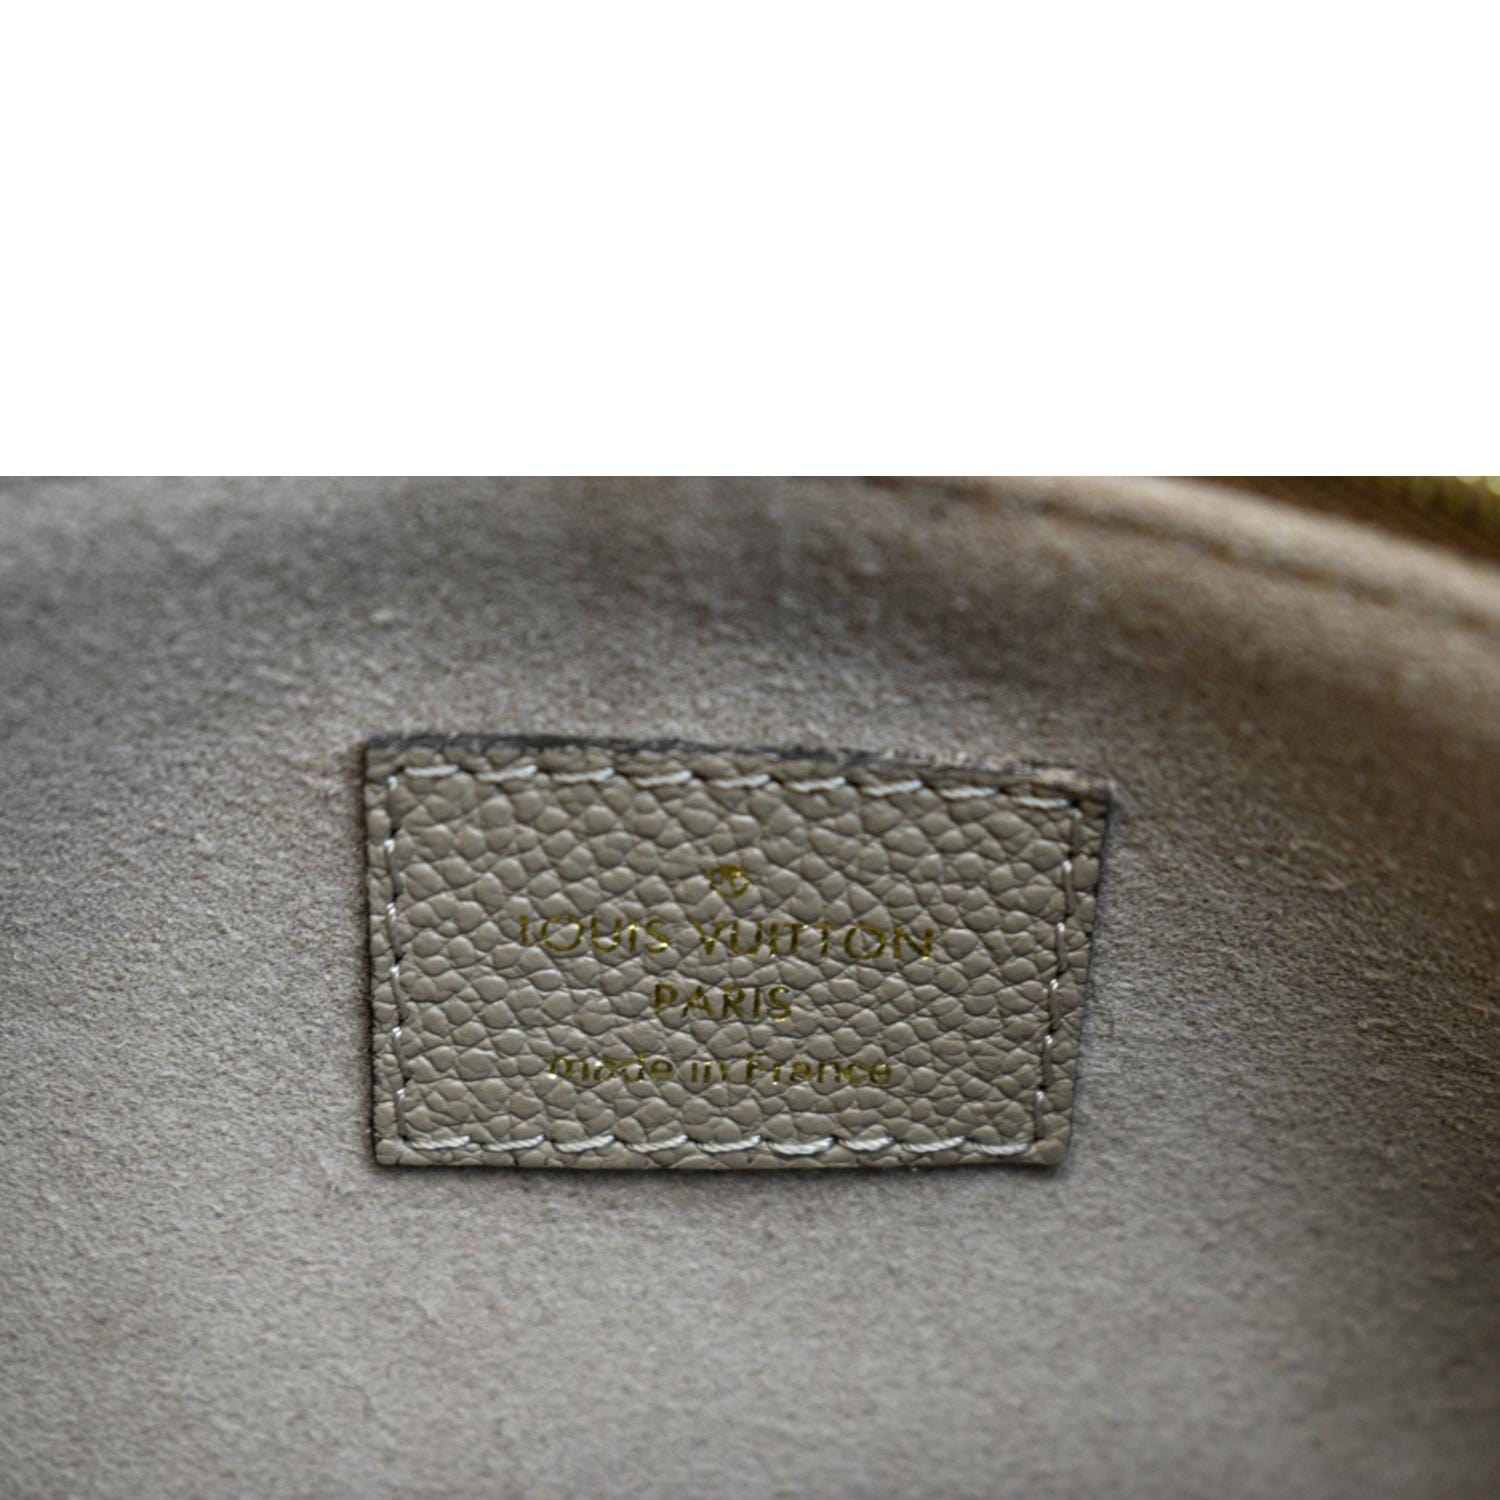 LOUIS VUITTON Cream Giant Monogram Empriente Cosmetic Pouch PM - The Purse  Ladies